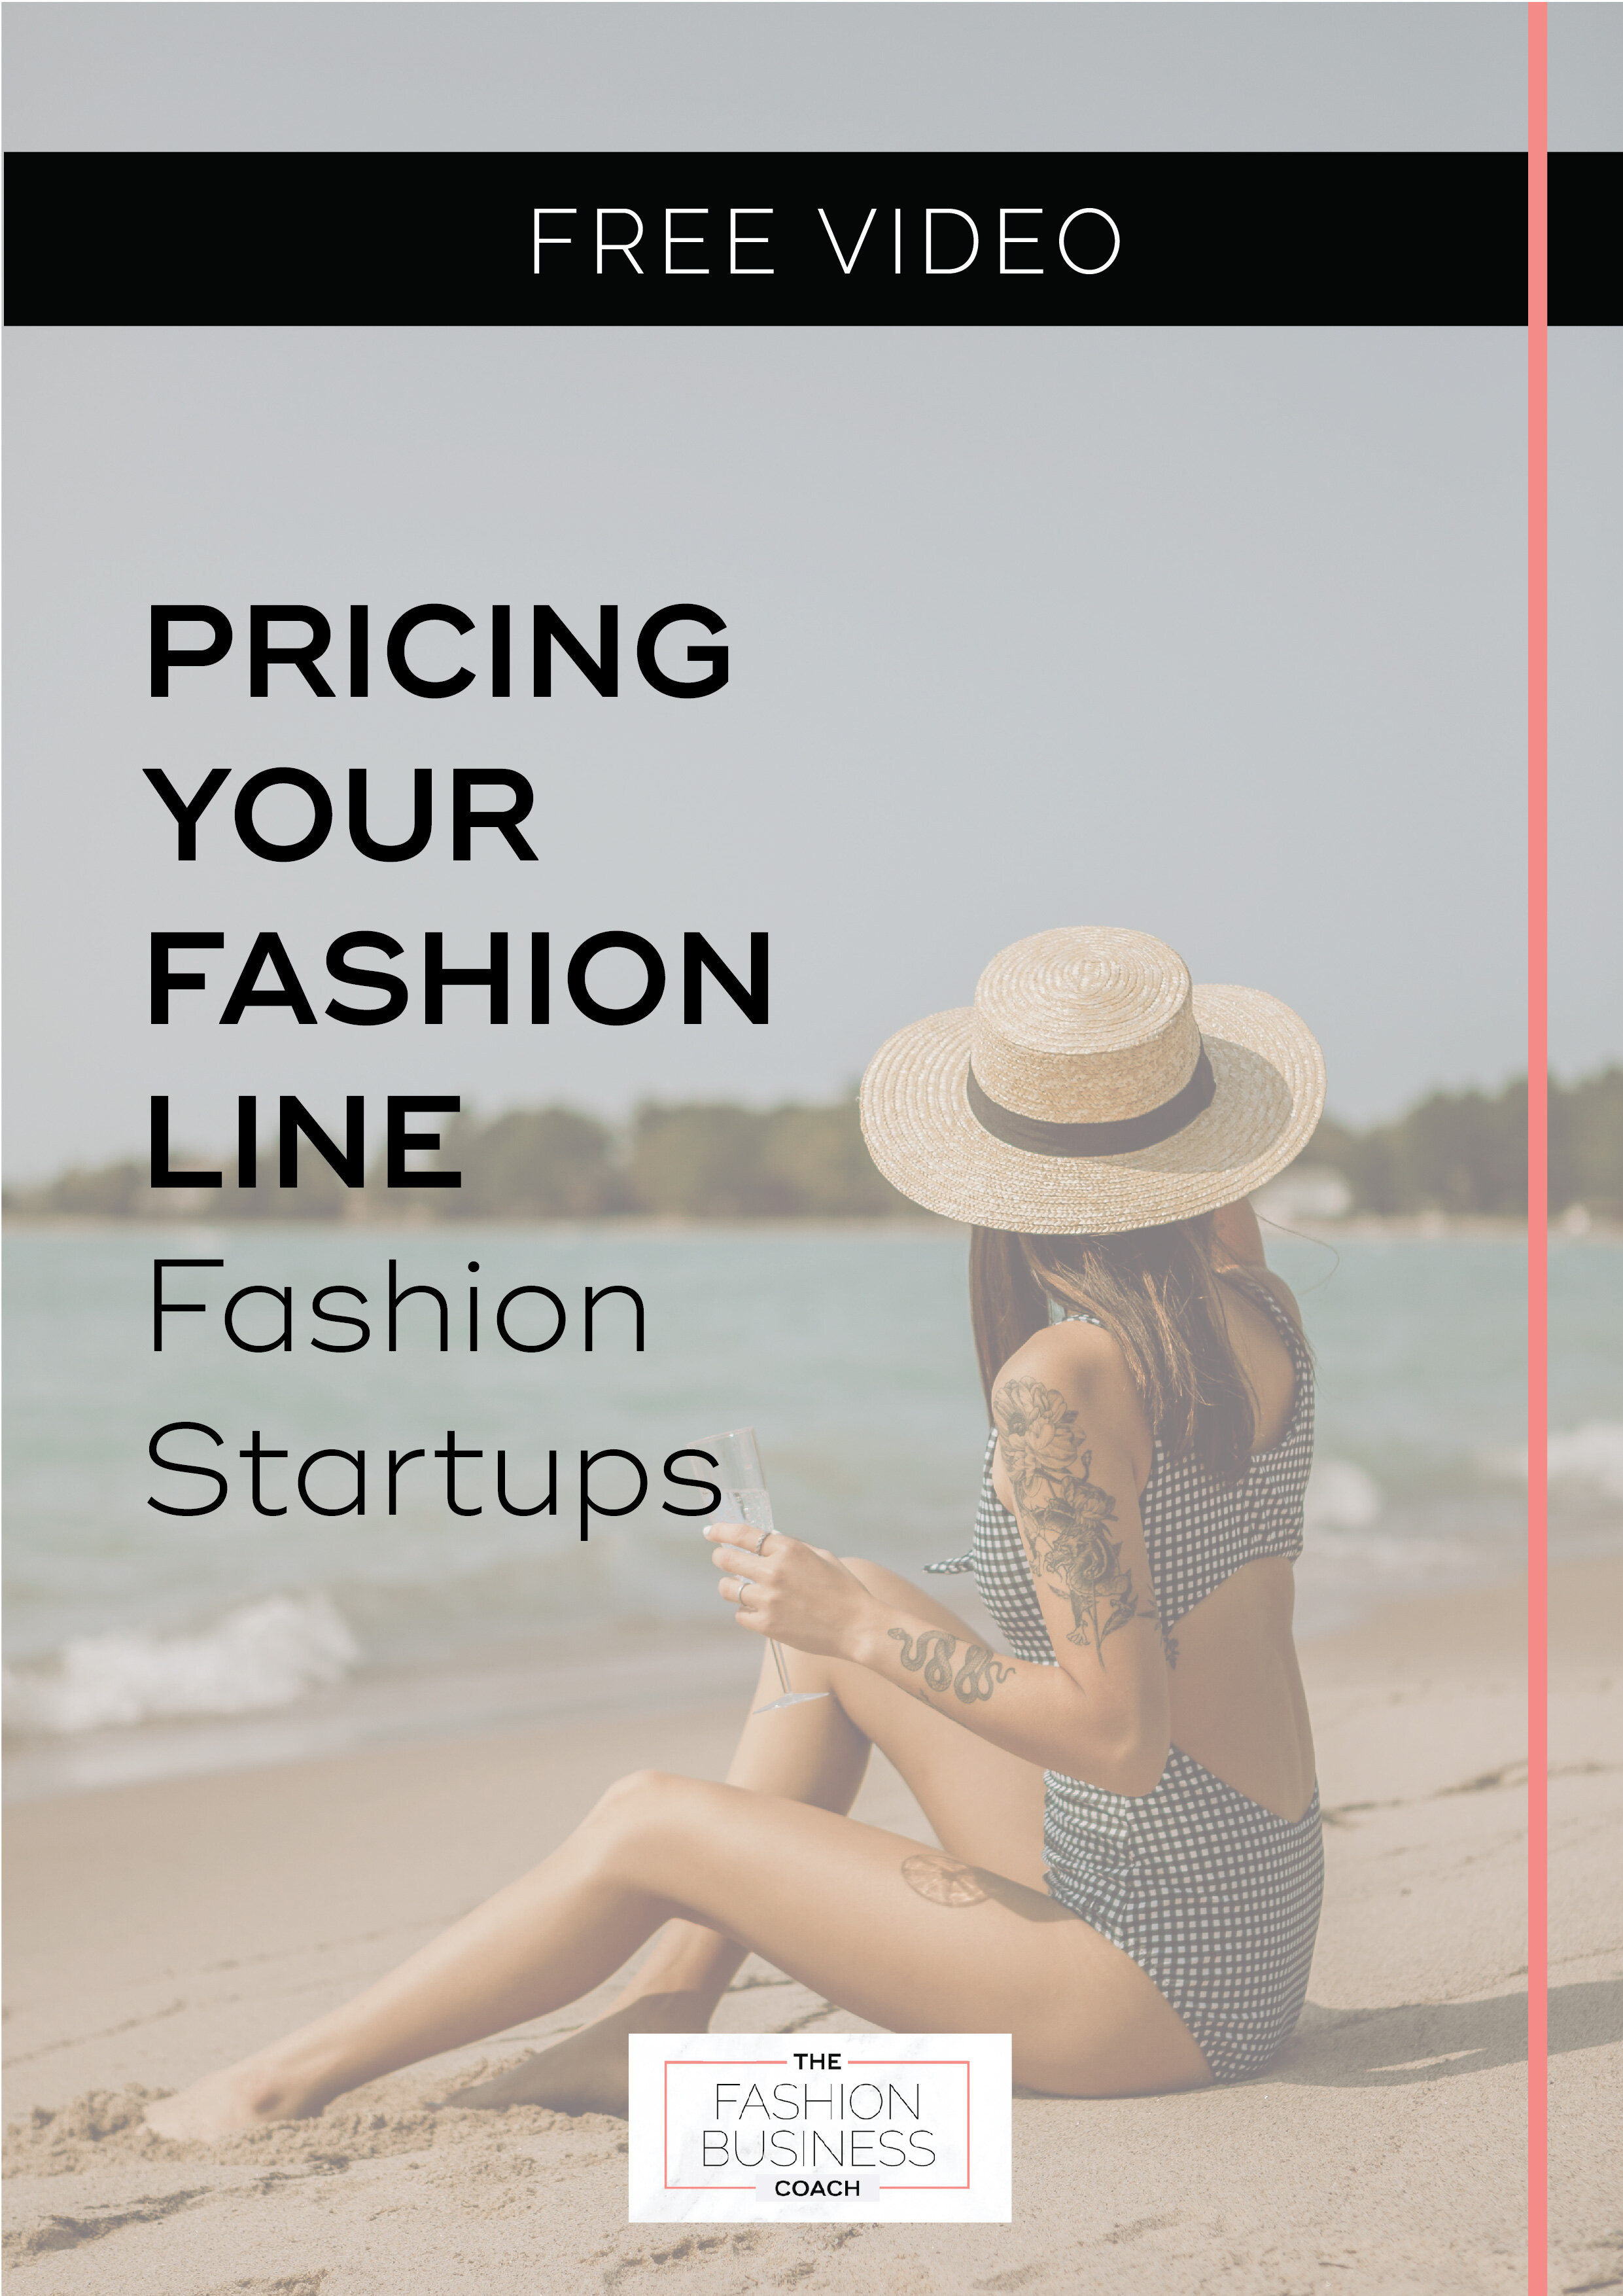 Pricing Your Fashion Line Fashion Startups1.jpg